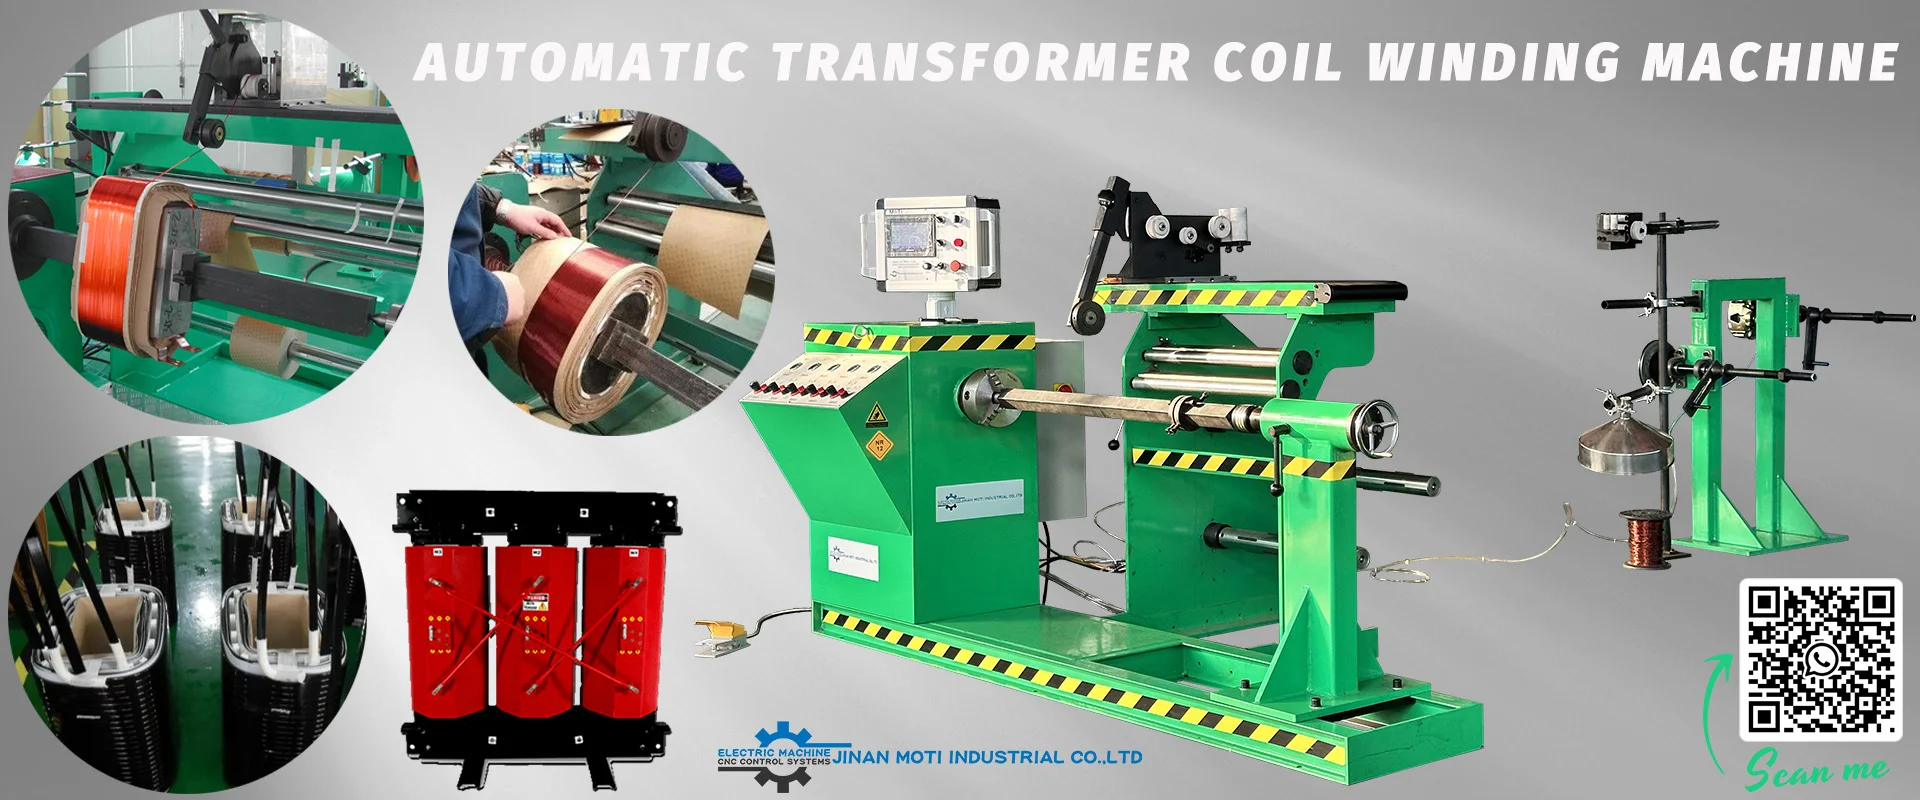 Automatic Power Transfomer Coil Winding Machine